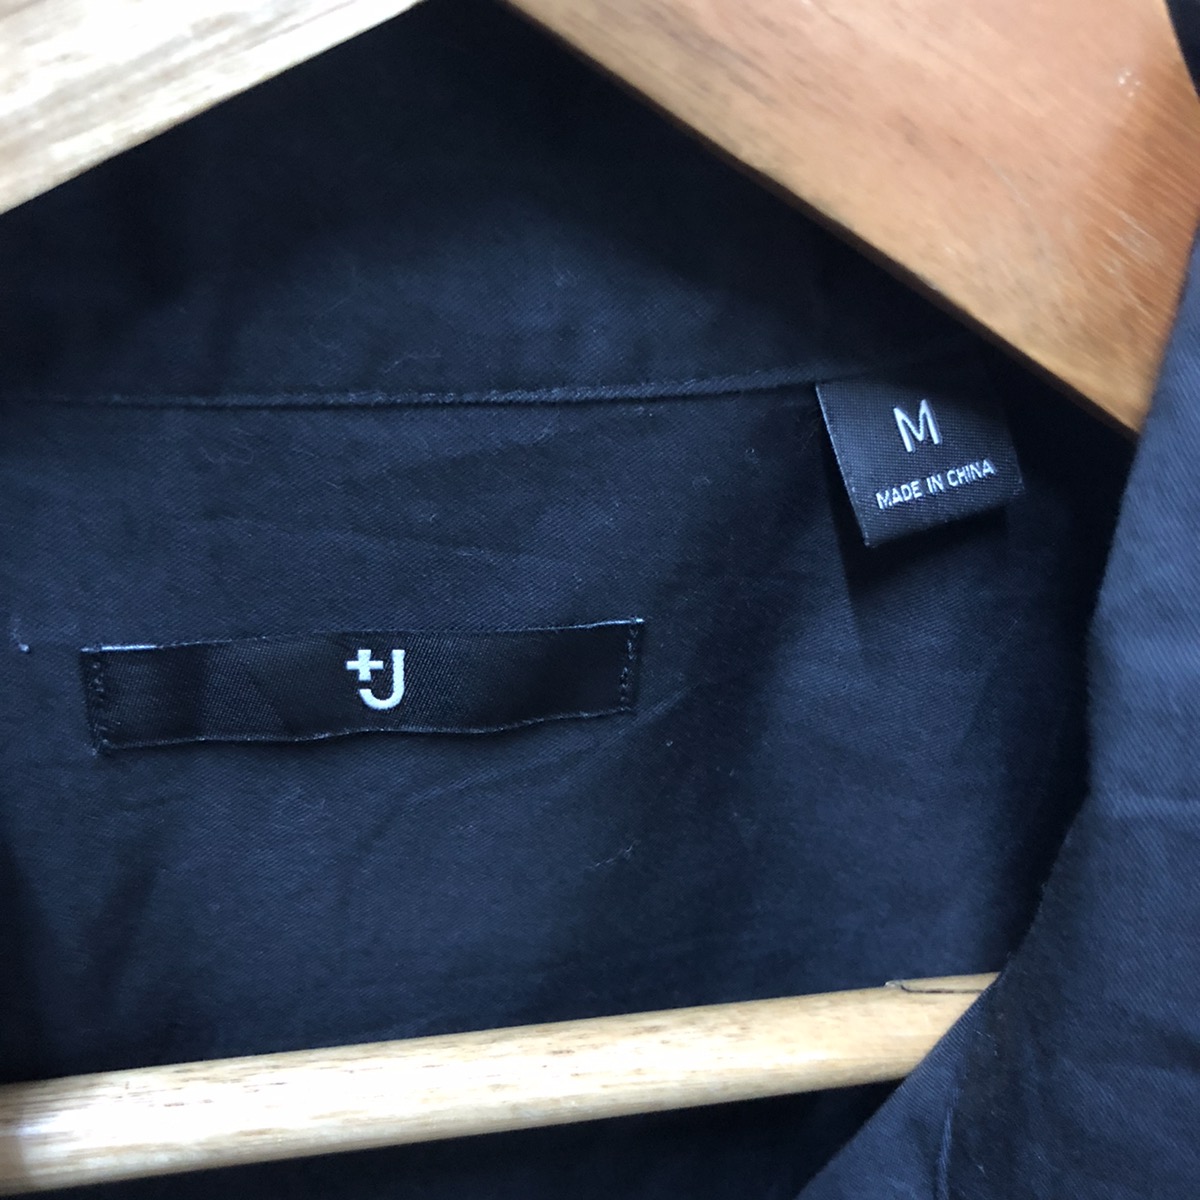 Uniqlo - Uniqlo x jil sander J+ long black jacket - 3